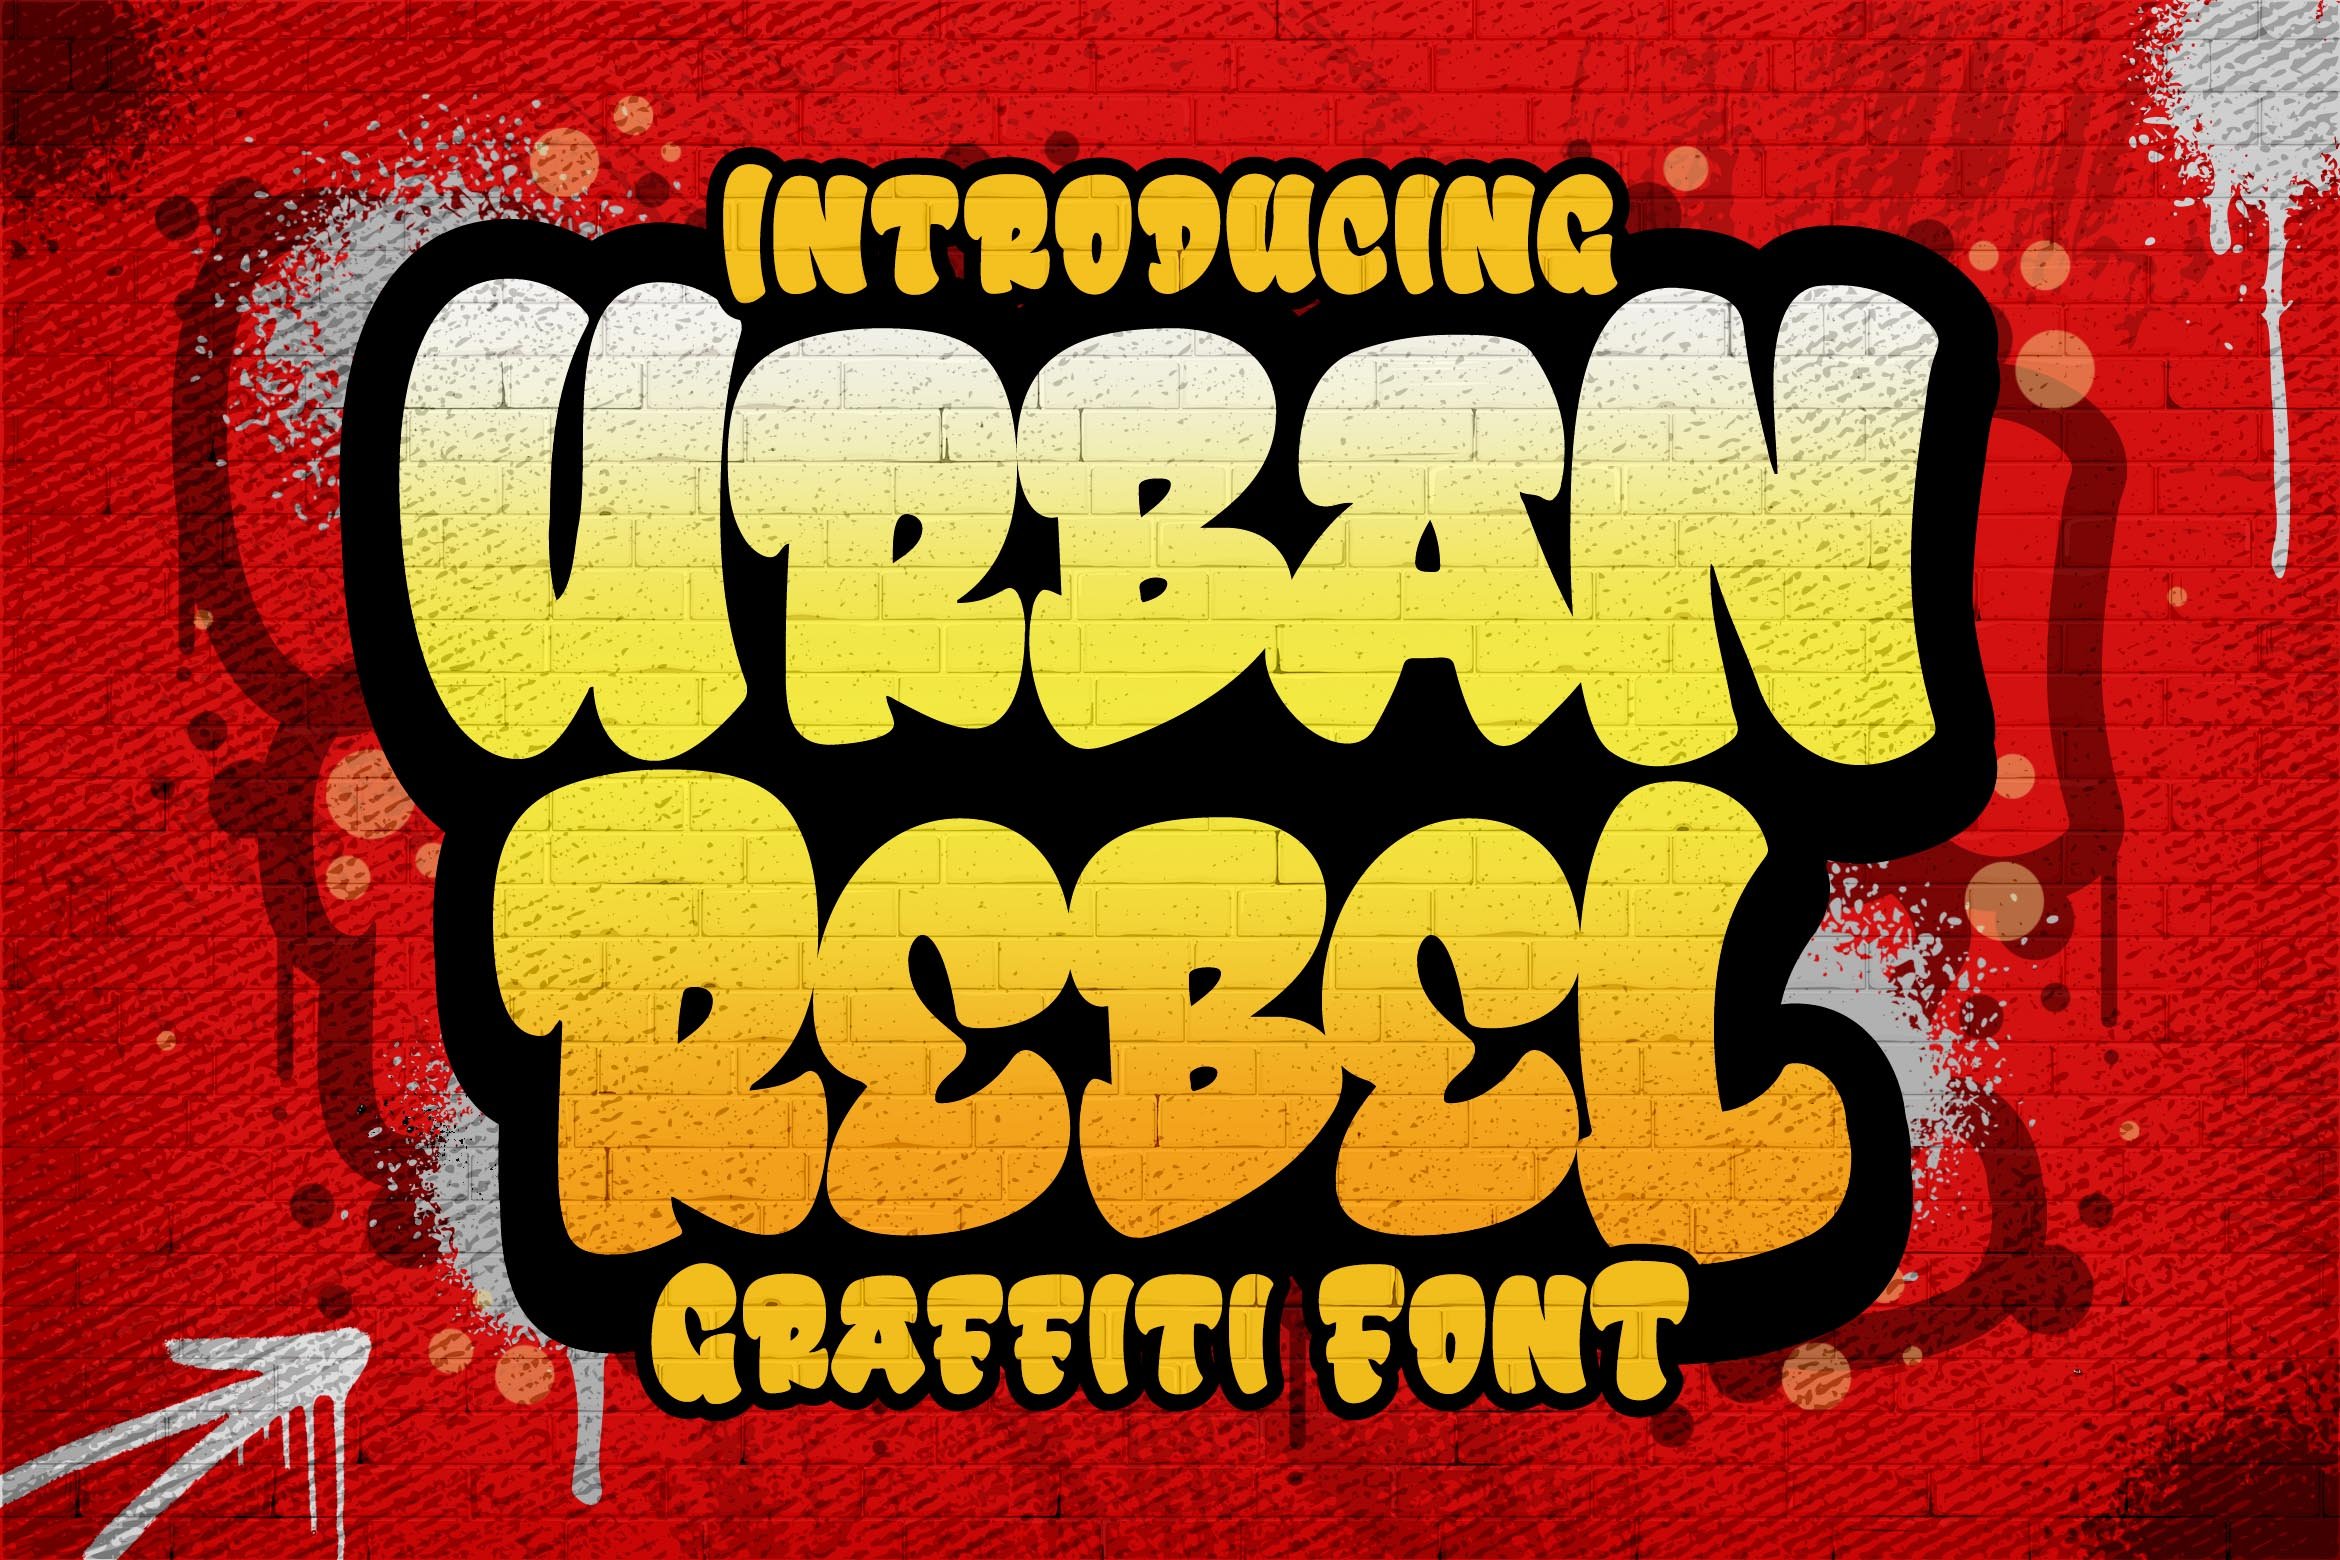 Urban Rebel a Graffiti Font cover image.